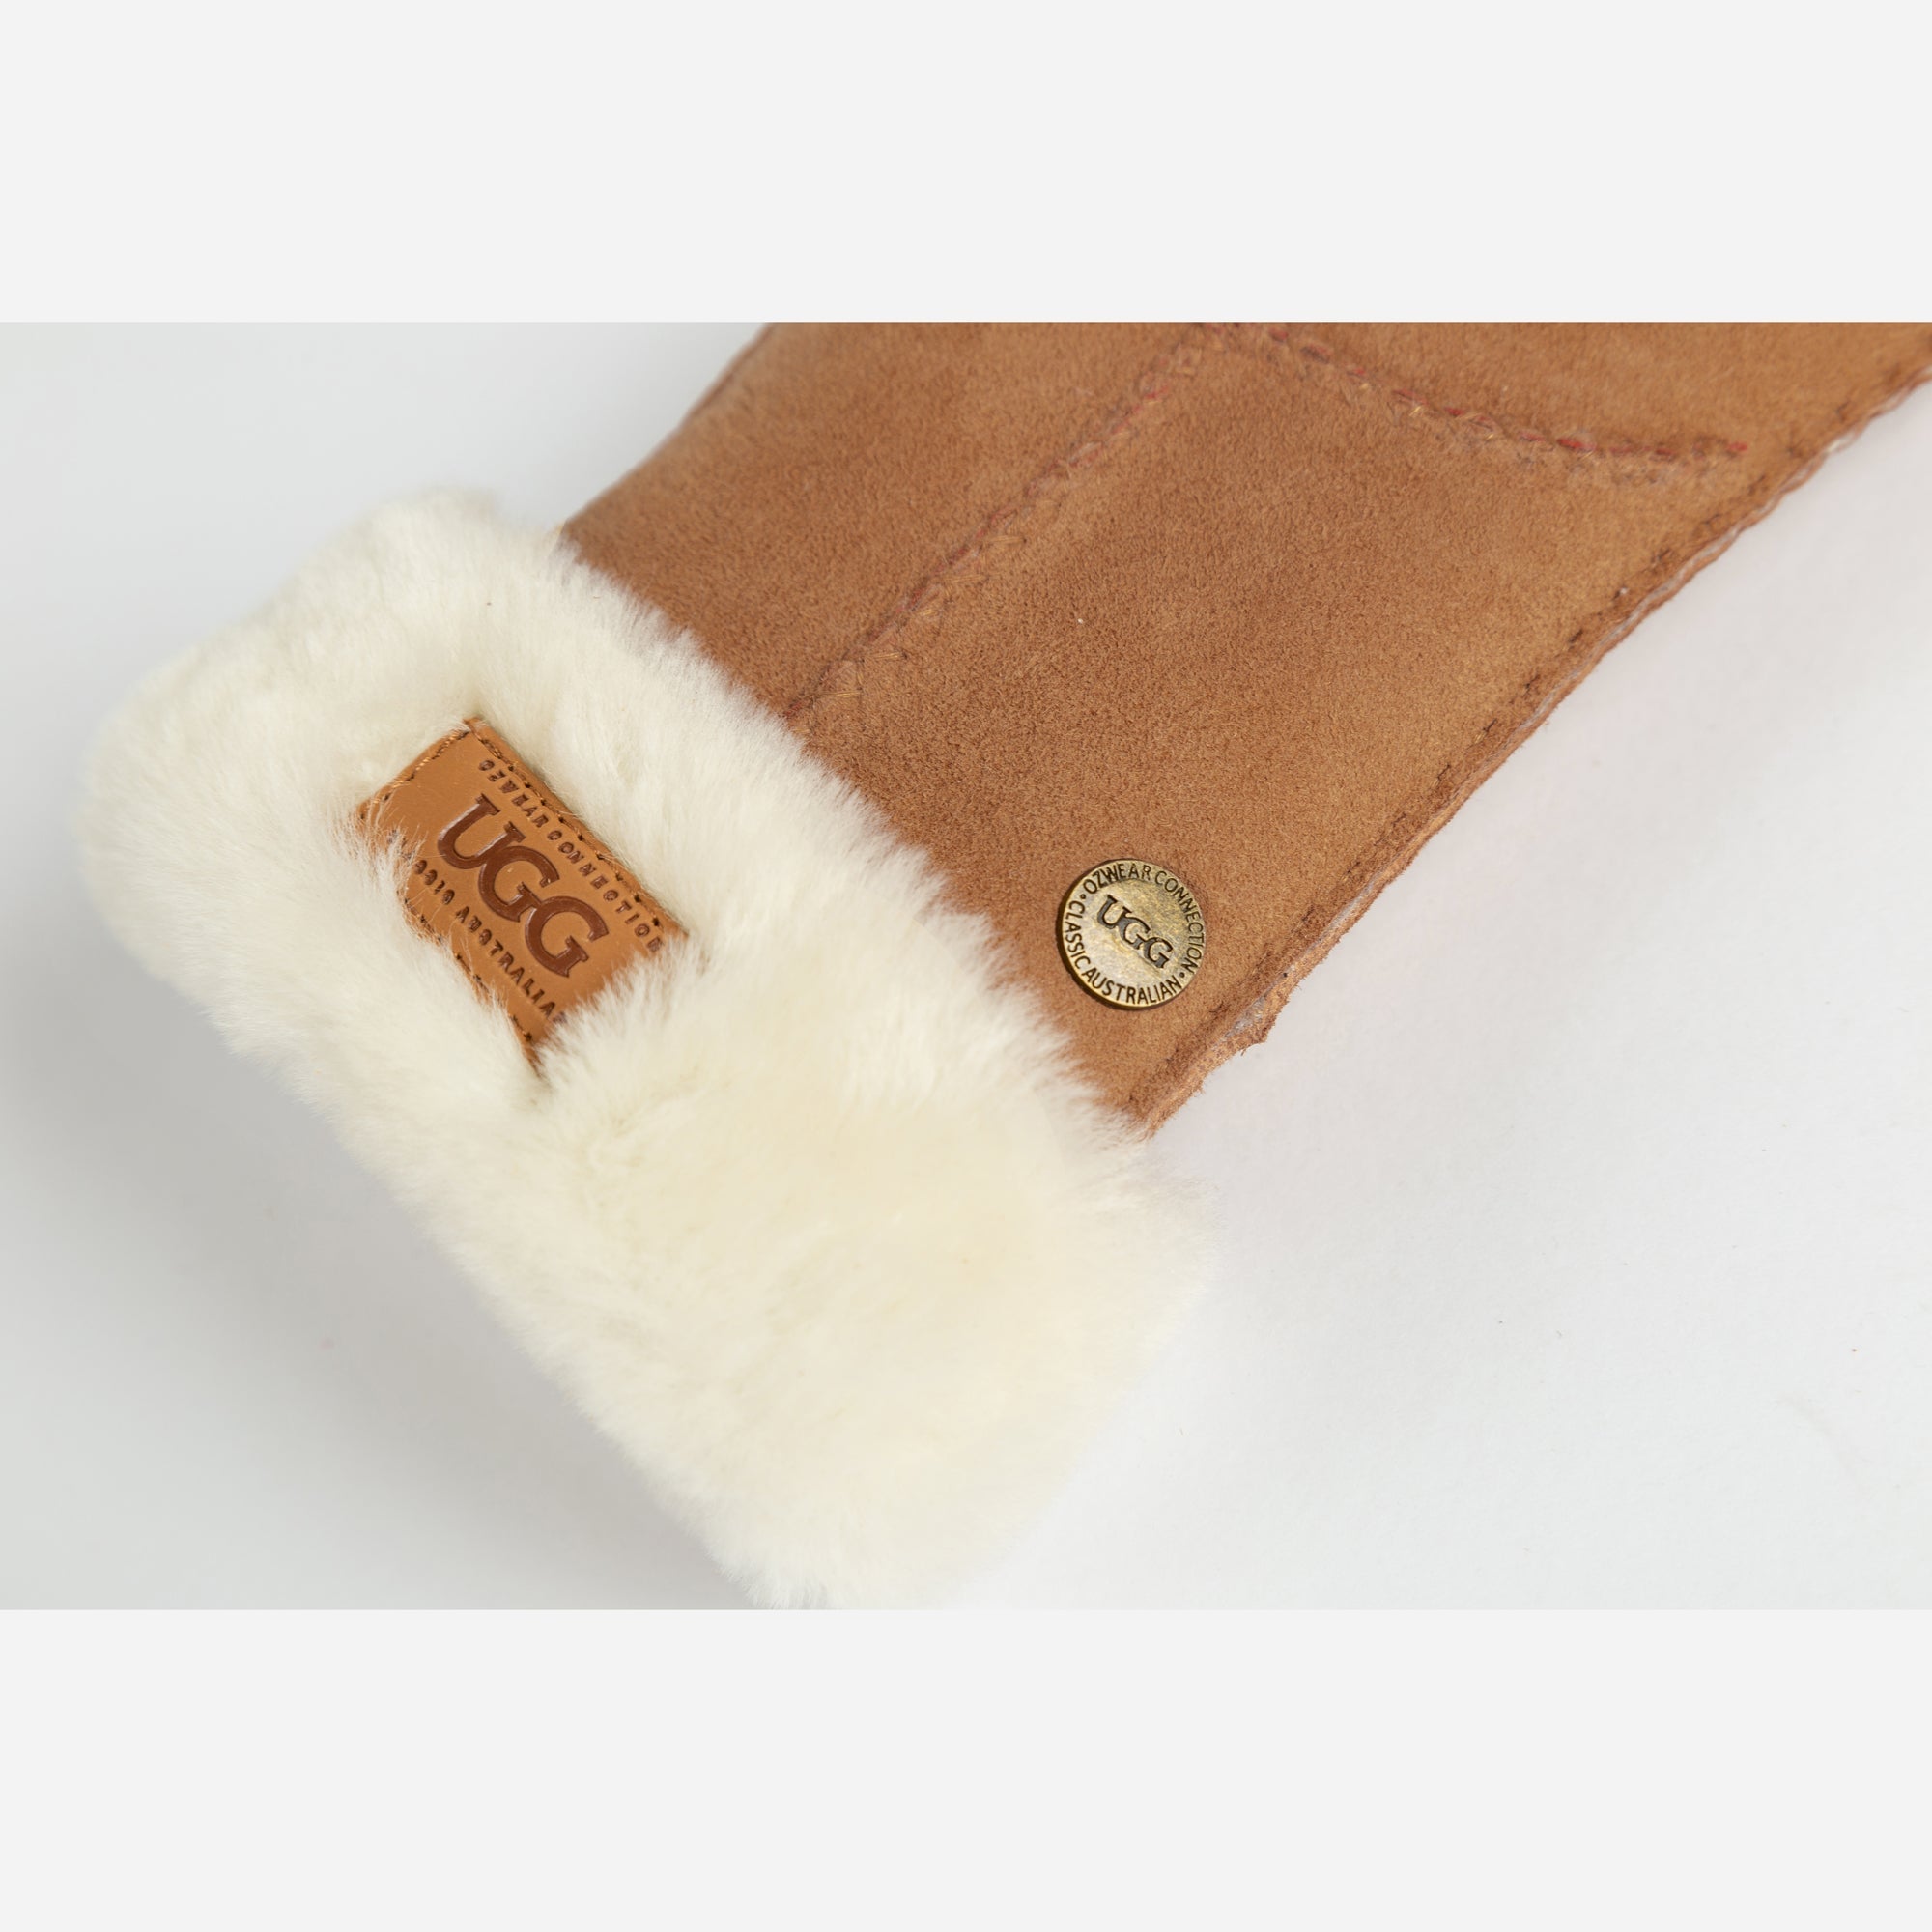 Ugg Sheepskin Touch Screen Gloves-Gloves-PEROZ Accessories